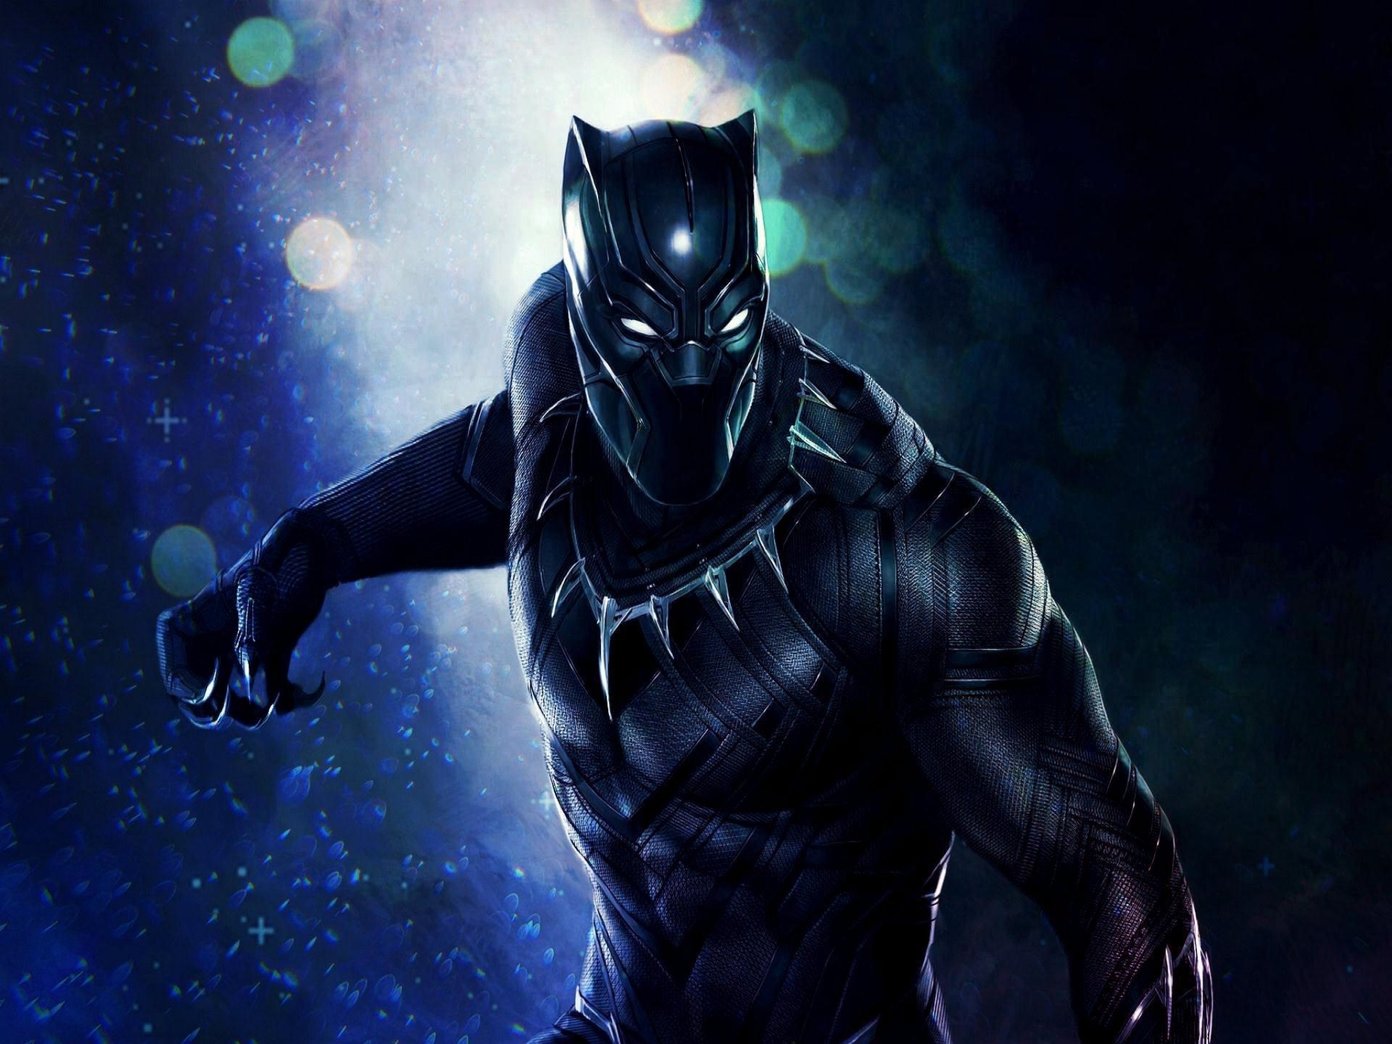 schwarze panther tapete,erfundener charakter,batman,superheld,dunkelheit,superschurke